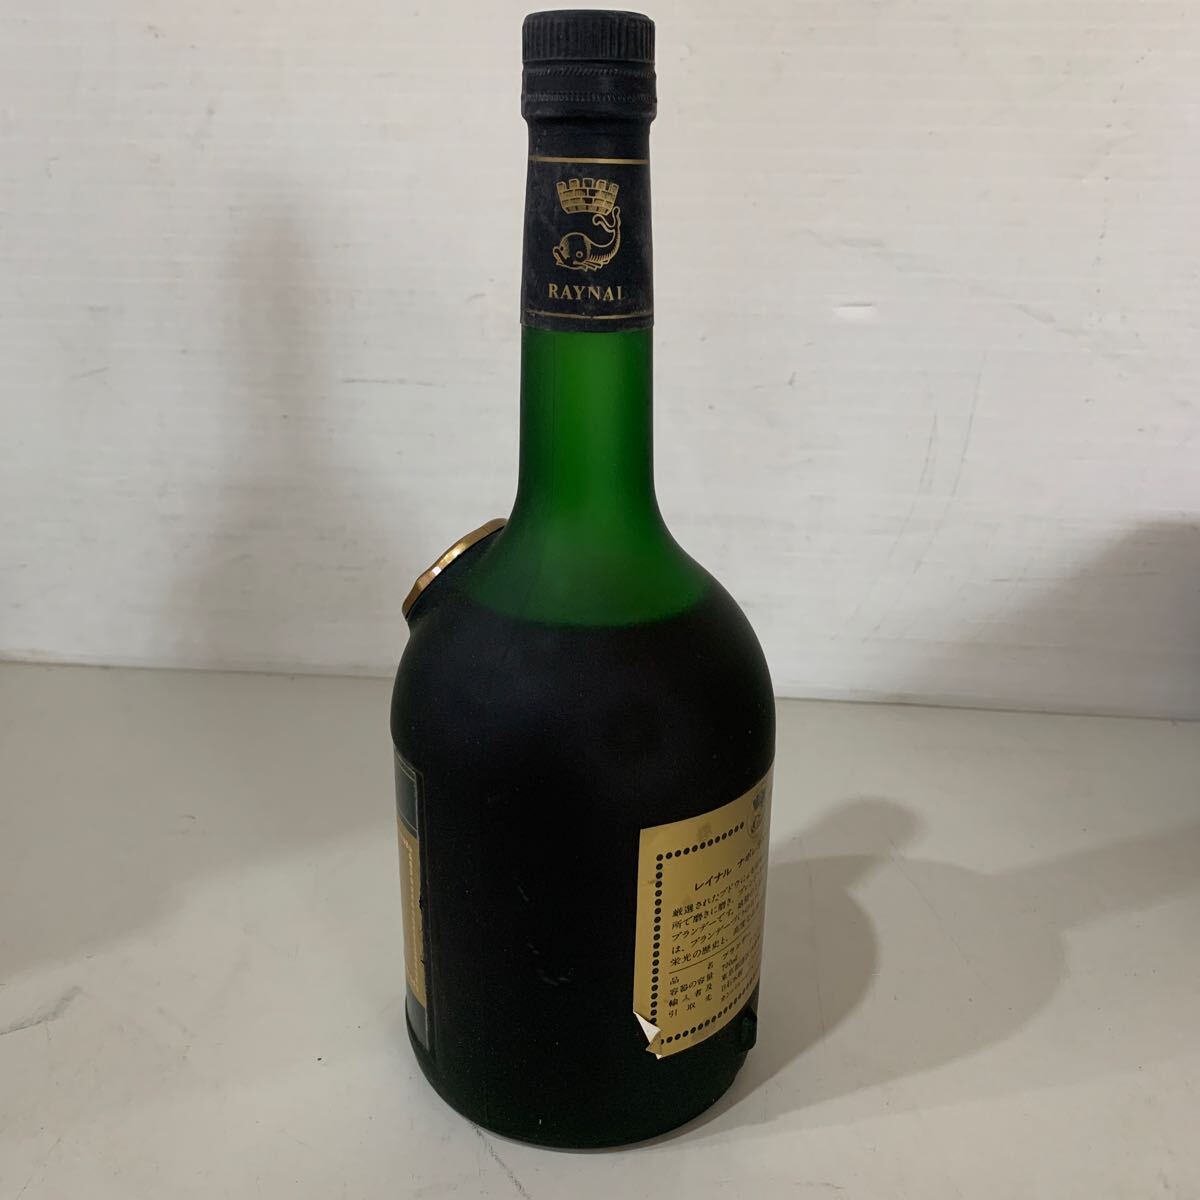 QW3812 not yet . plug RAYNAL NAPOLEON Dauphin Ray naru Napoleon do- fan 40% 700ml brandy foreign alcohol old sake 0506